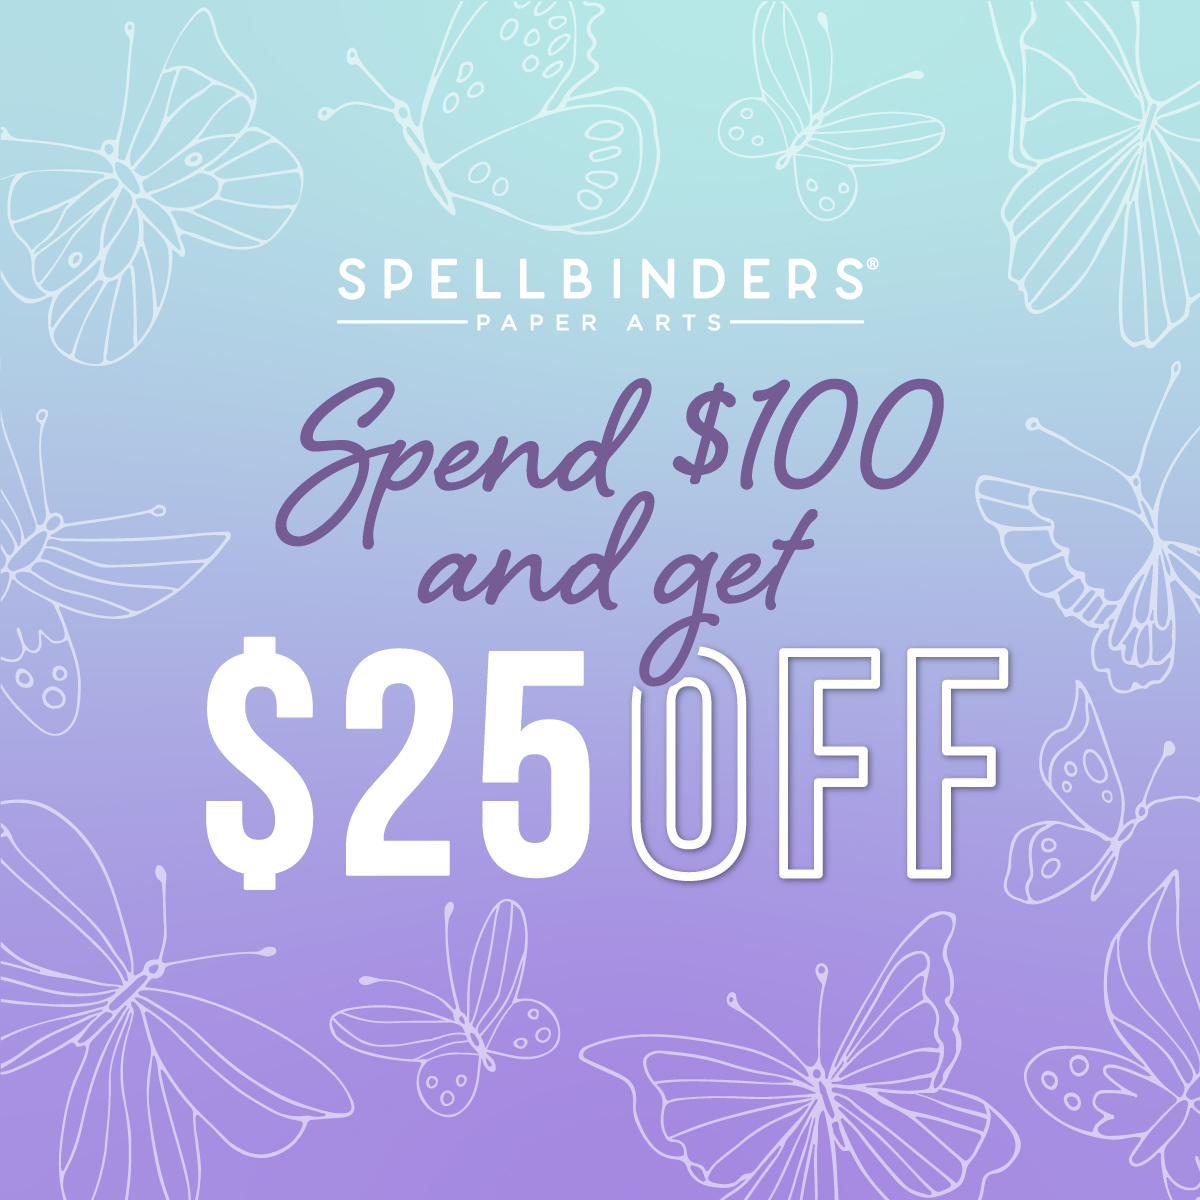 Spellbinders Spend $100 and Get $25 Off